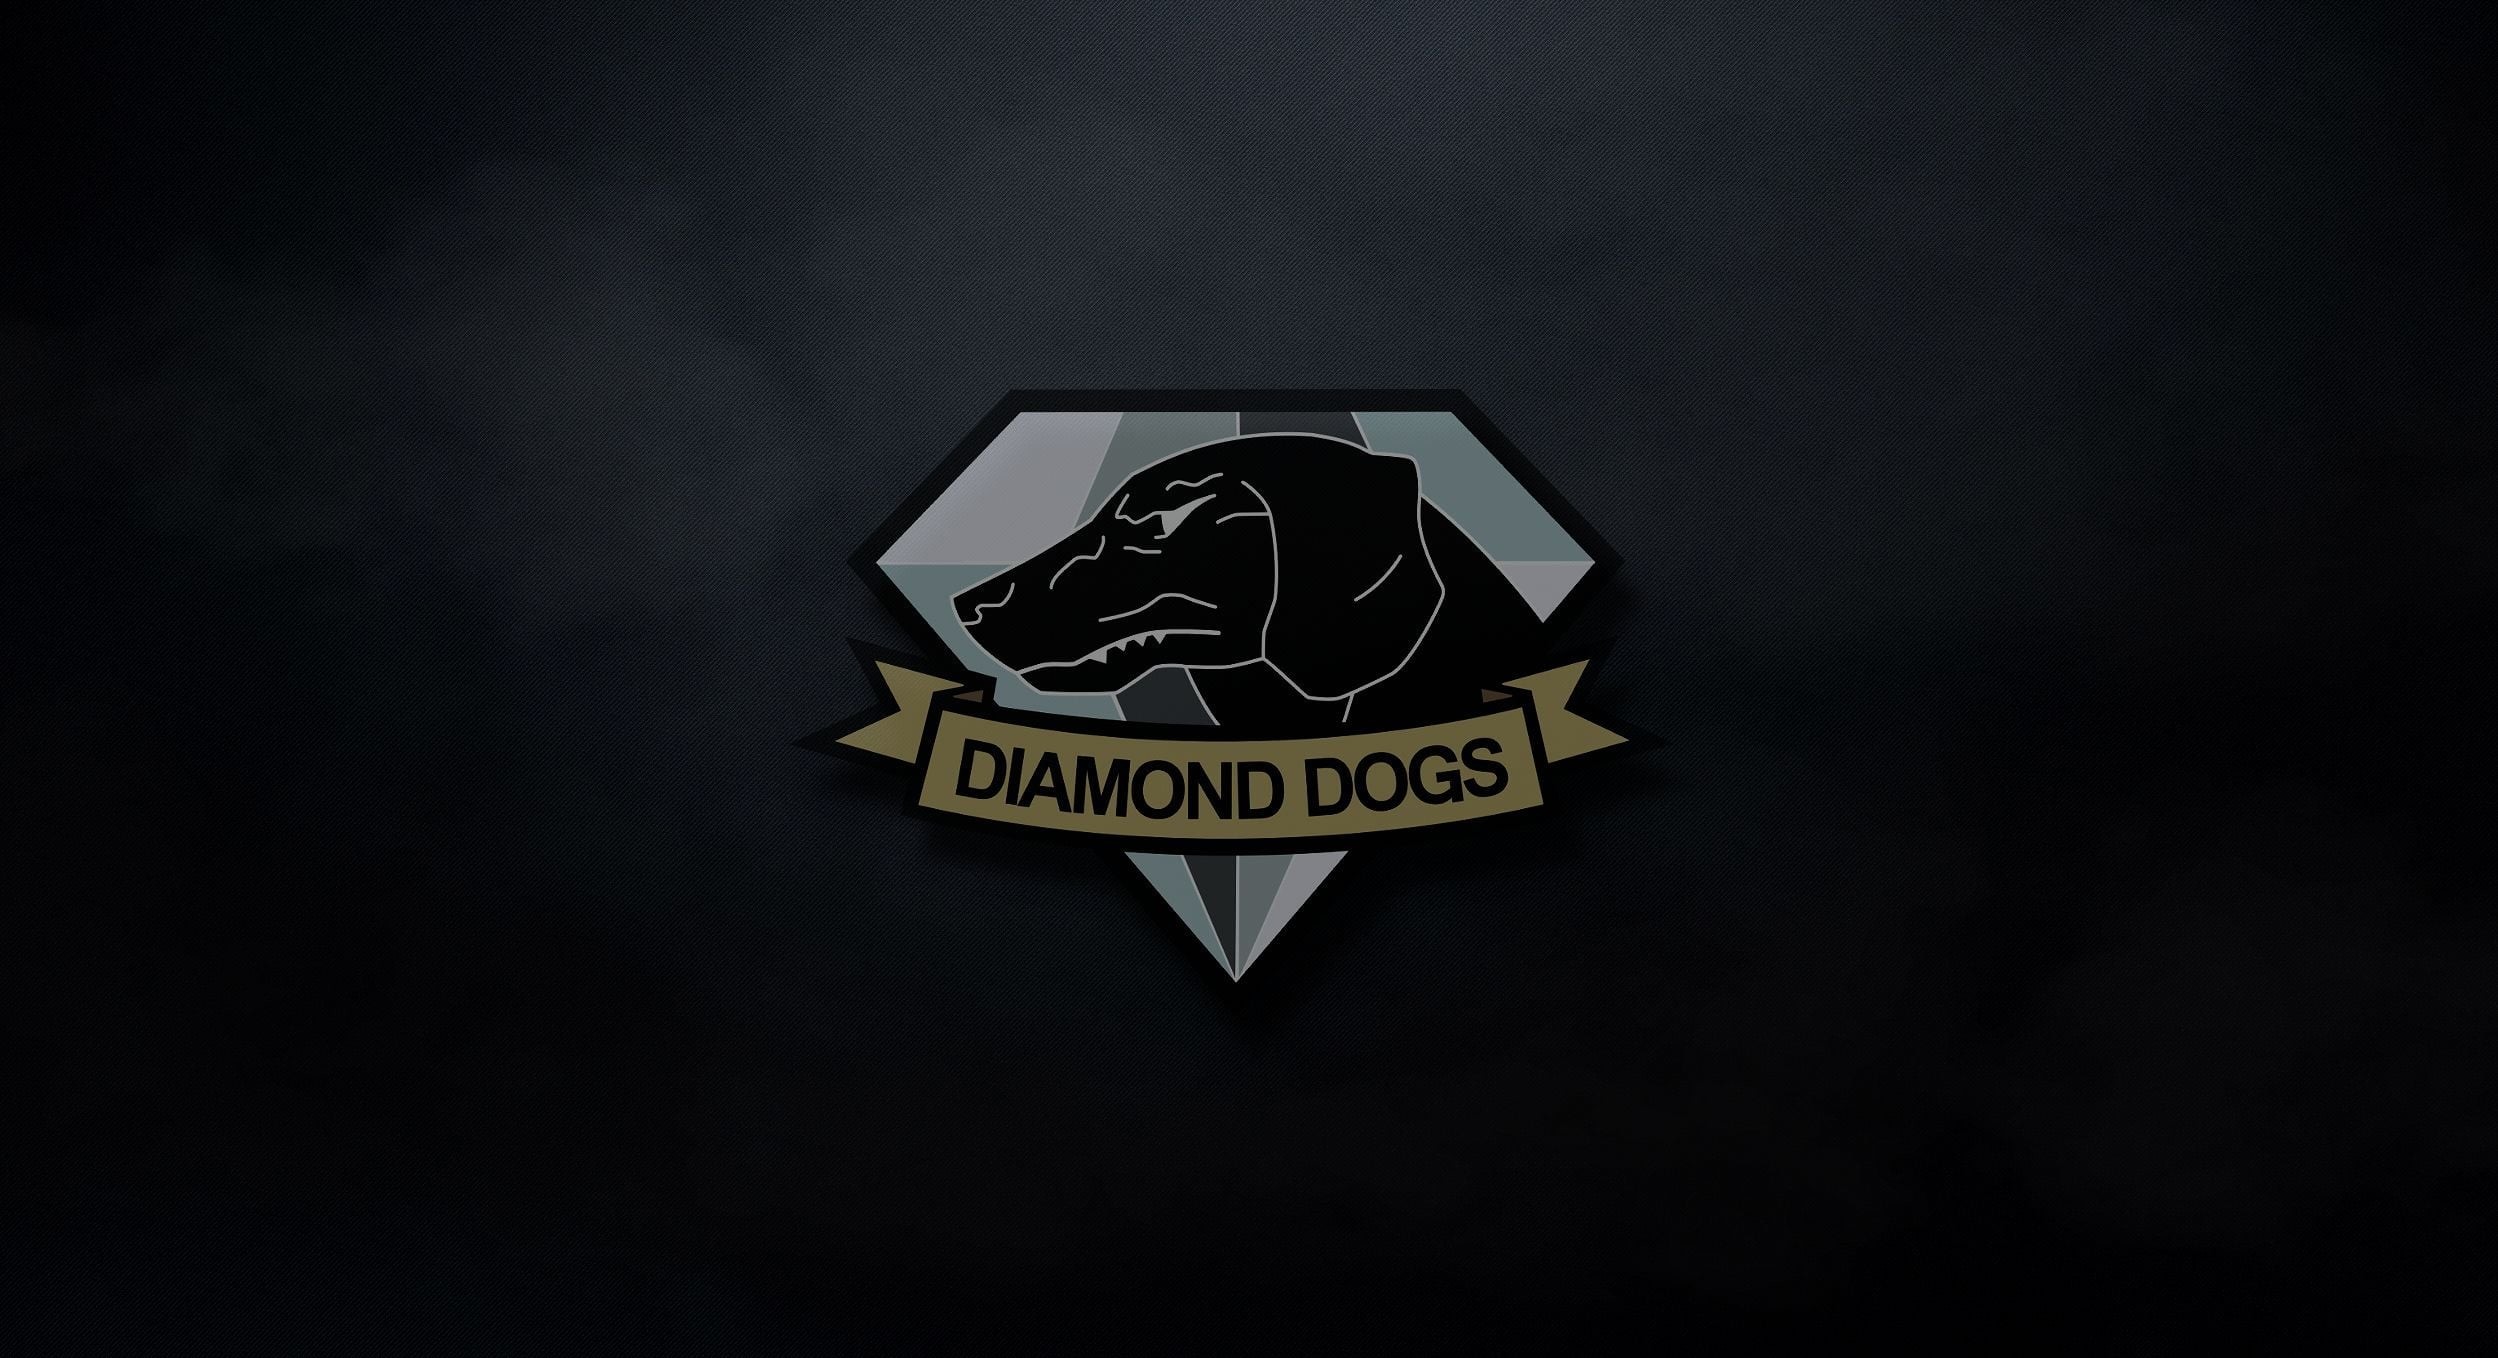 2498x1358 Metal Gear Solid 5 The Phantom Pain diamond dogs logo